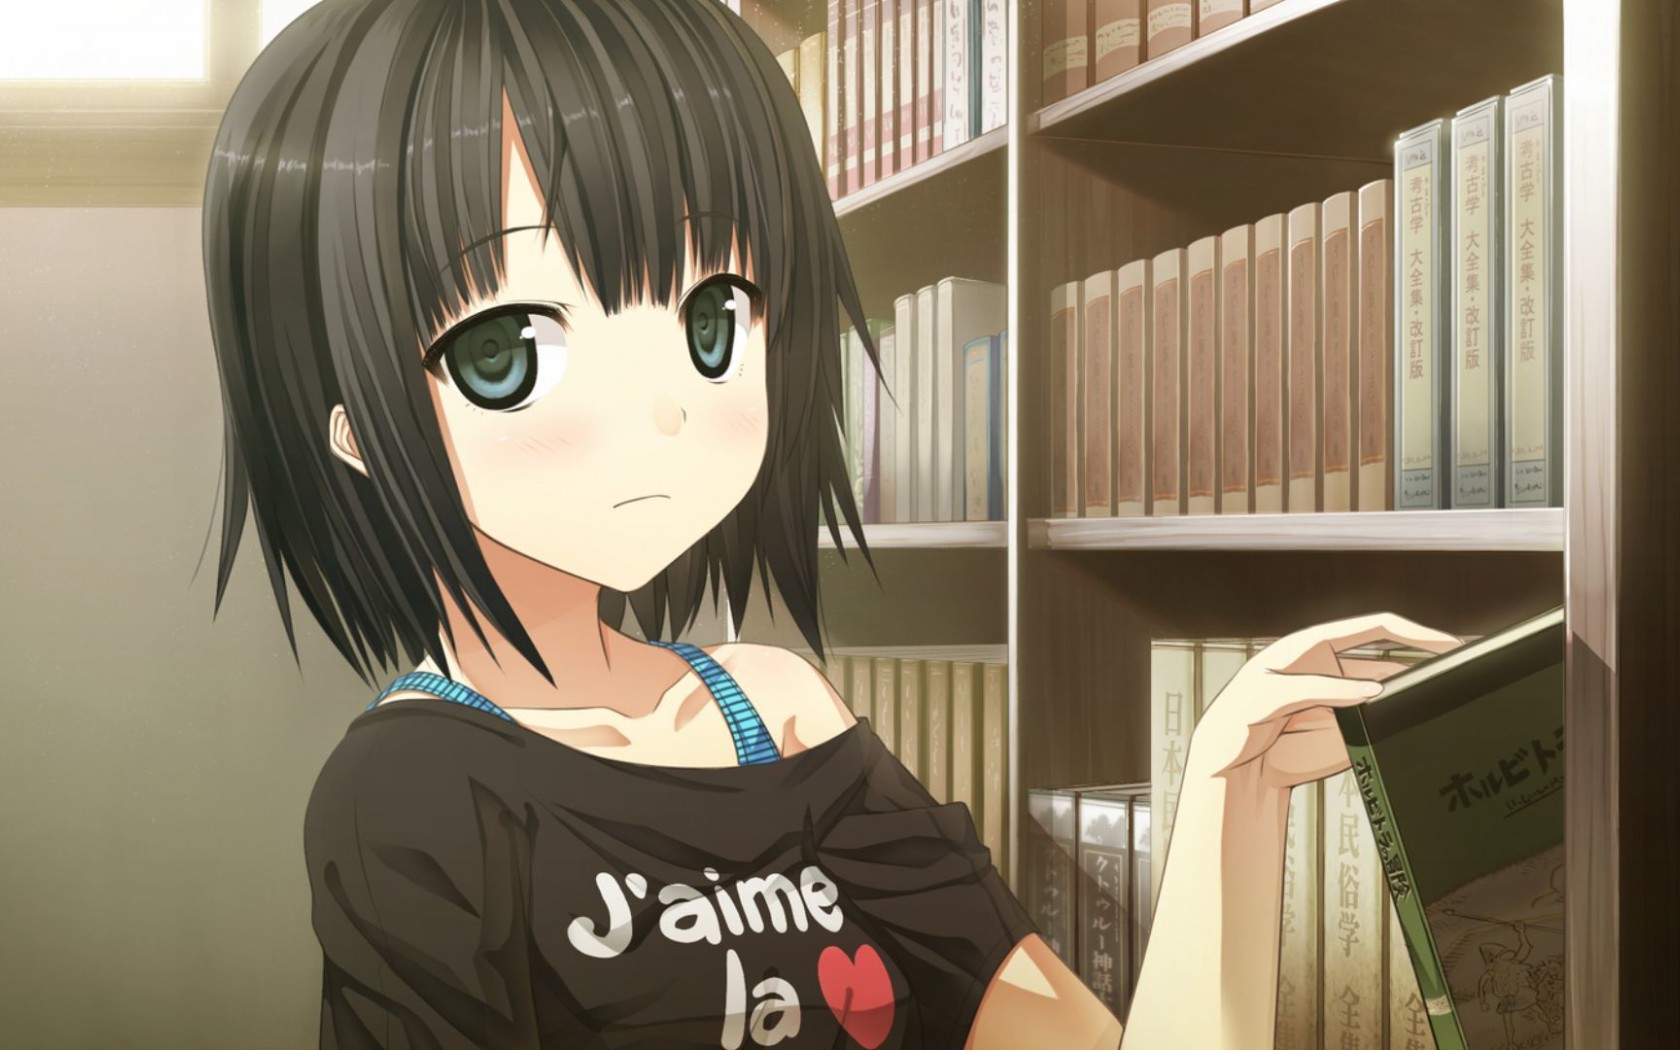 1224x1224 girl, anime, books 1224x1224 Resolution Wallpaper, HD Anime ...
